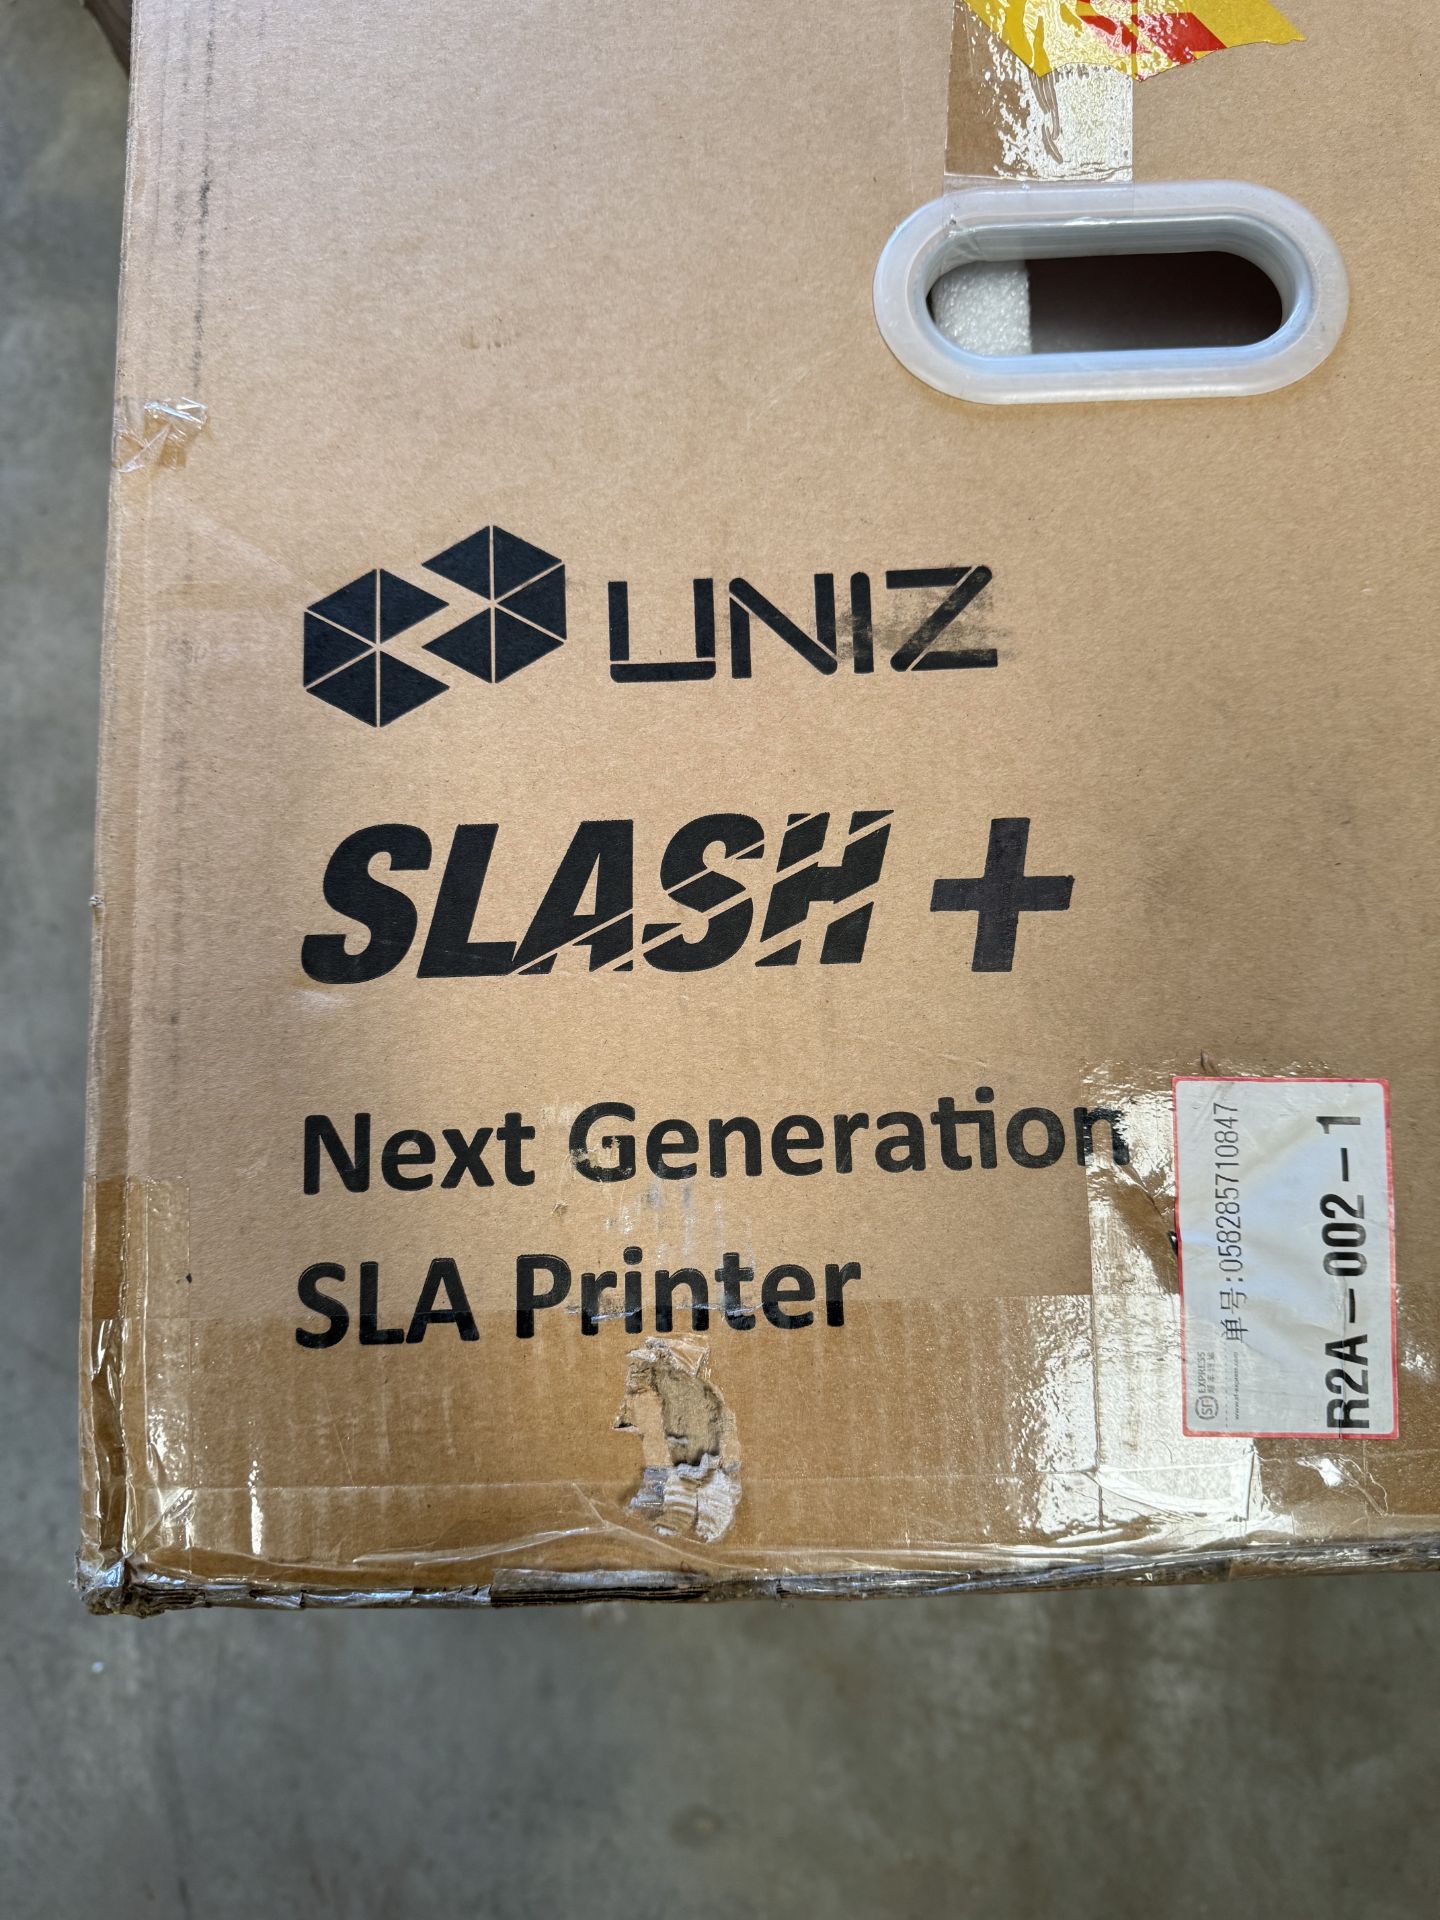 Liniz Slash Next Generation SLA printer - Image 3 of 3